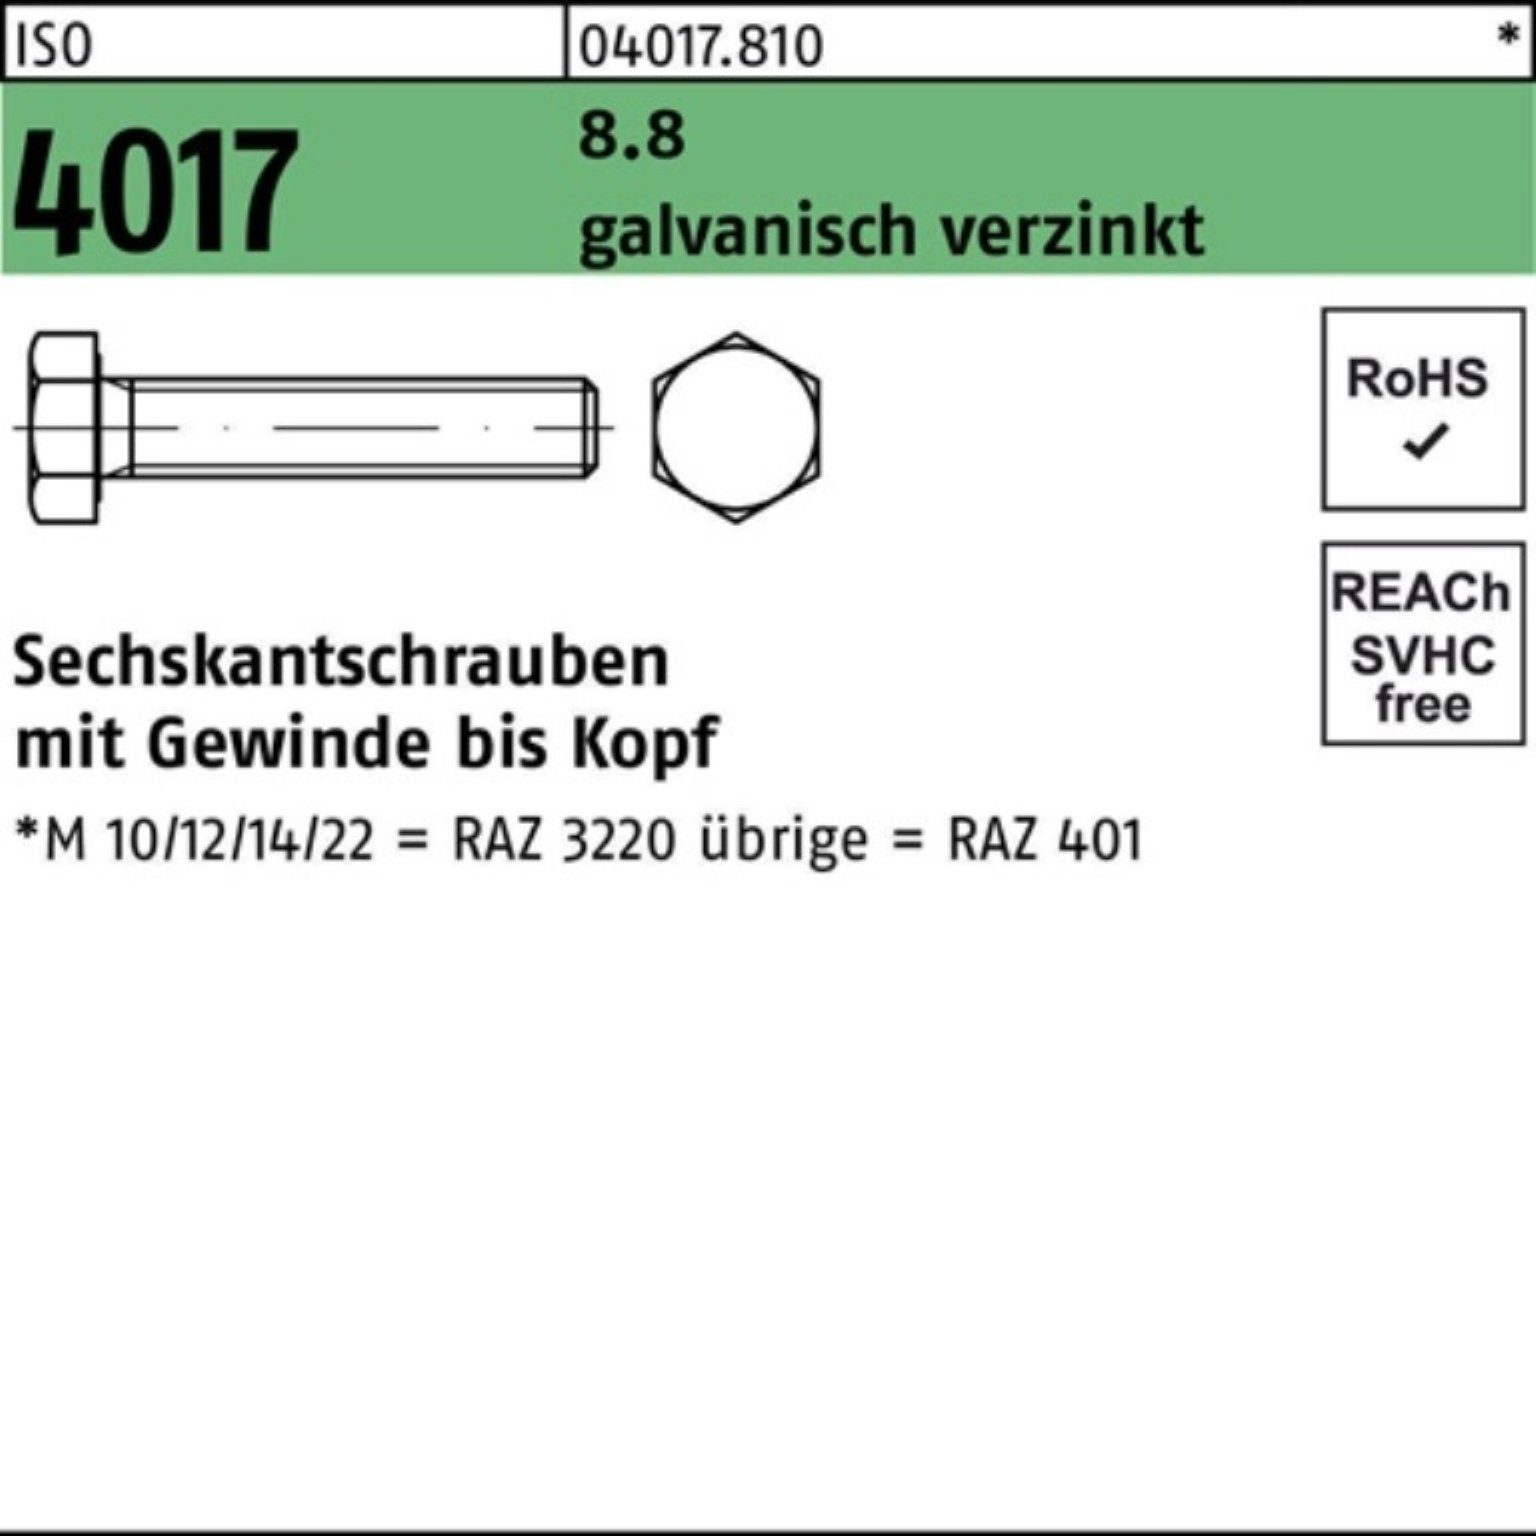 Bufab Sechskantschraube 100er Pack Sechskantschraube ISO 4017 VG M20x 100 8.8 galv.verz. 25 St